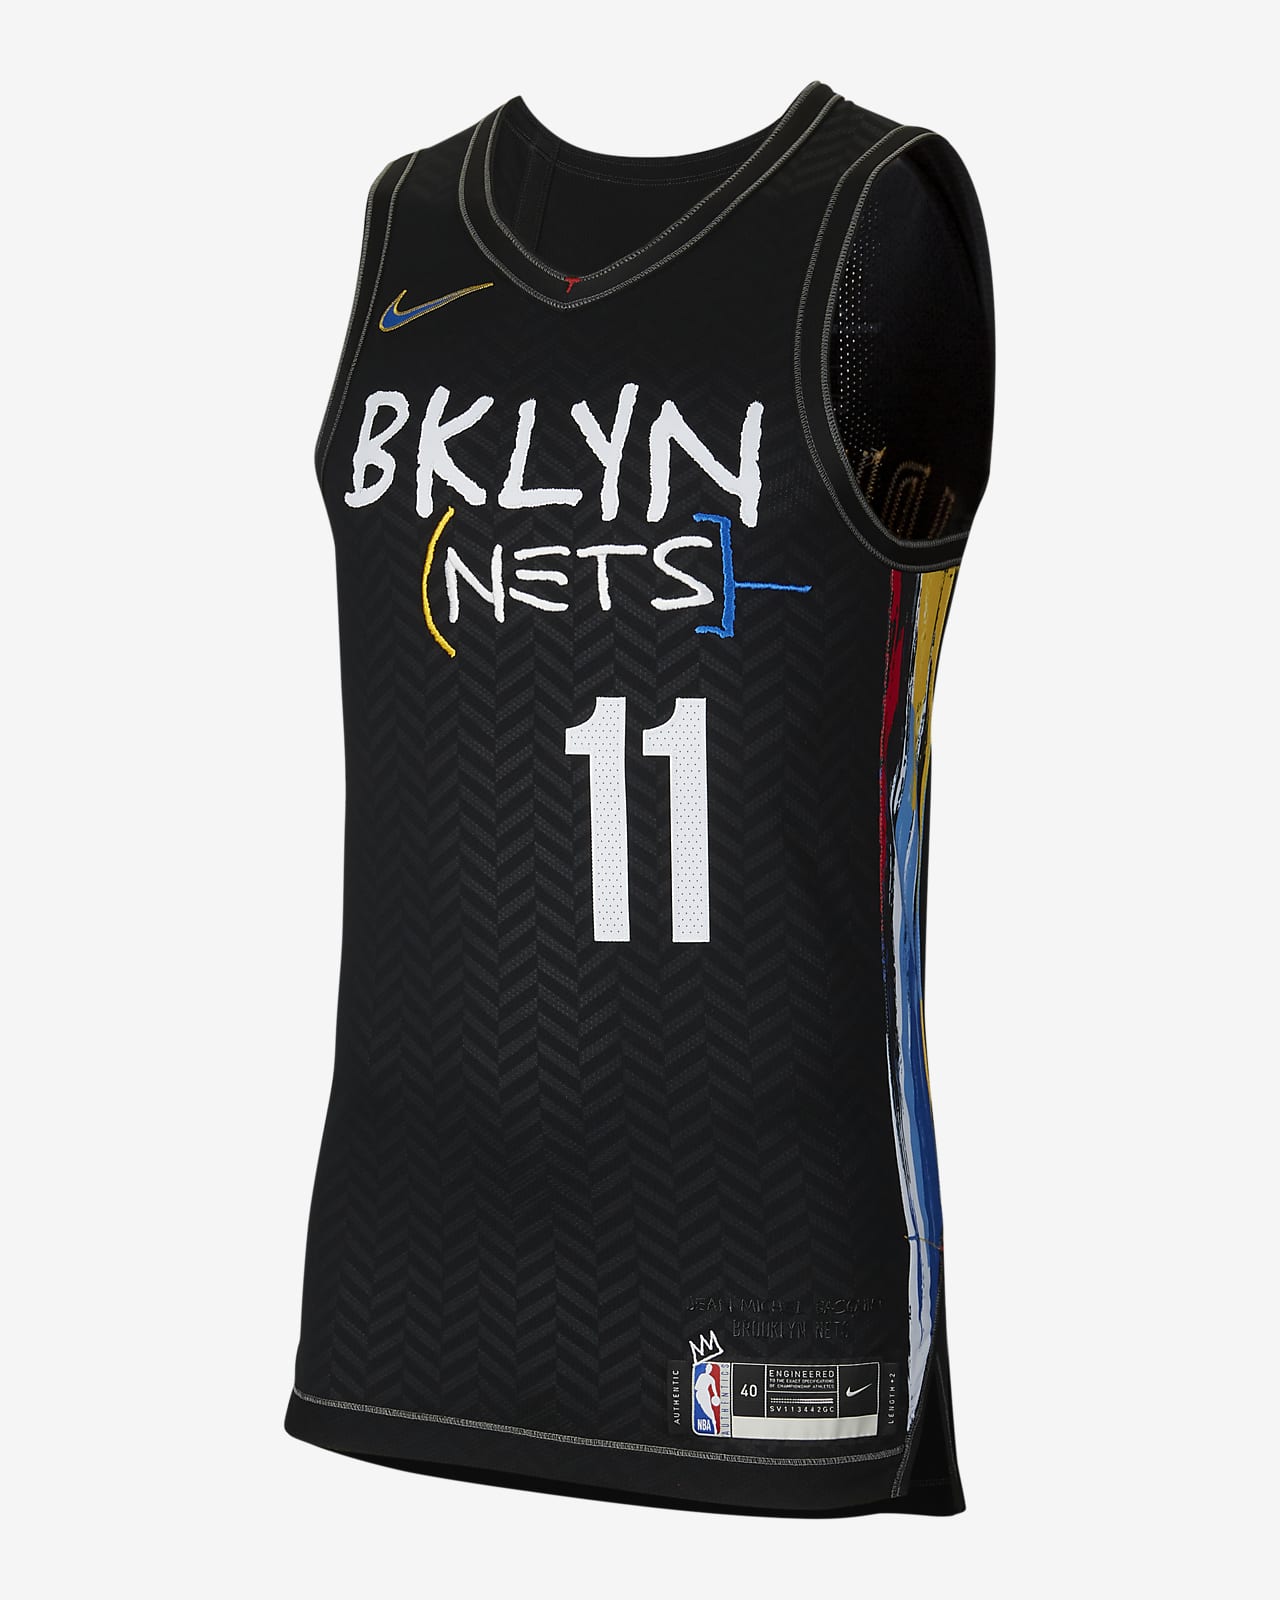 brooklyn nets basketball shirt